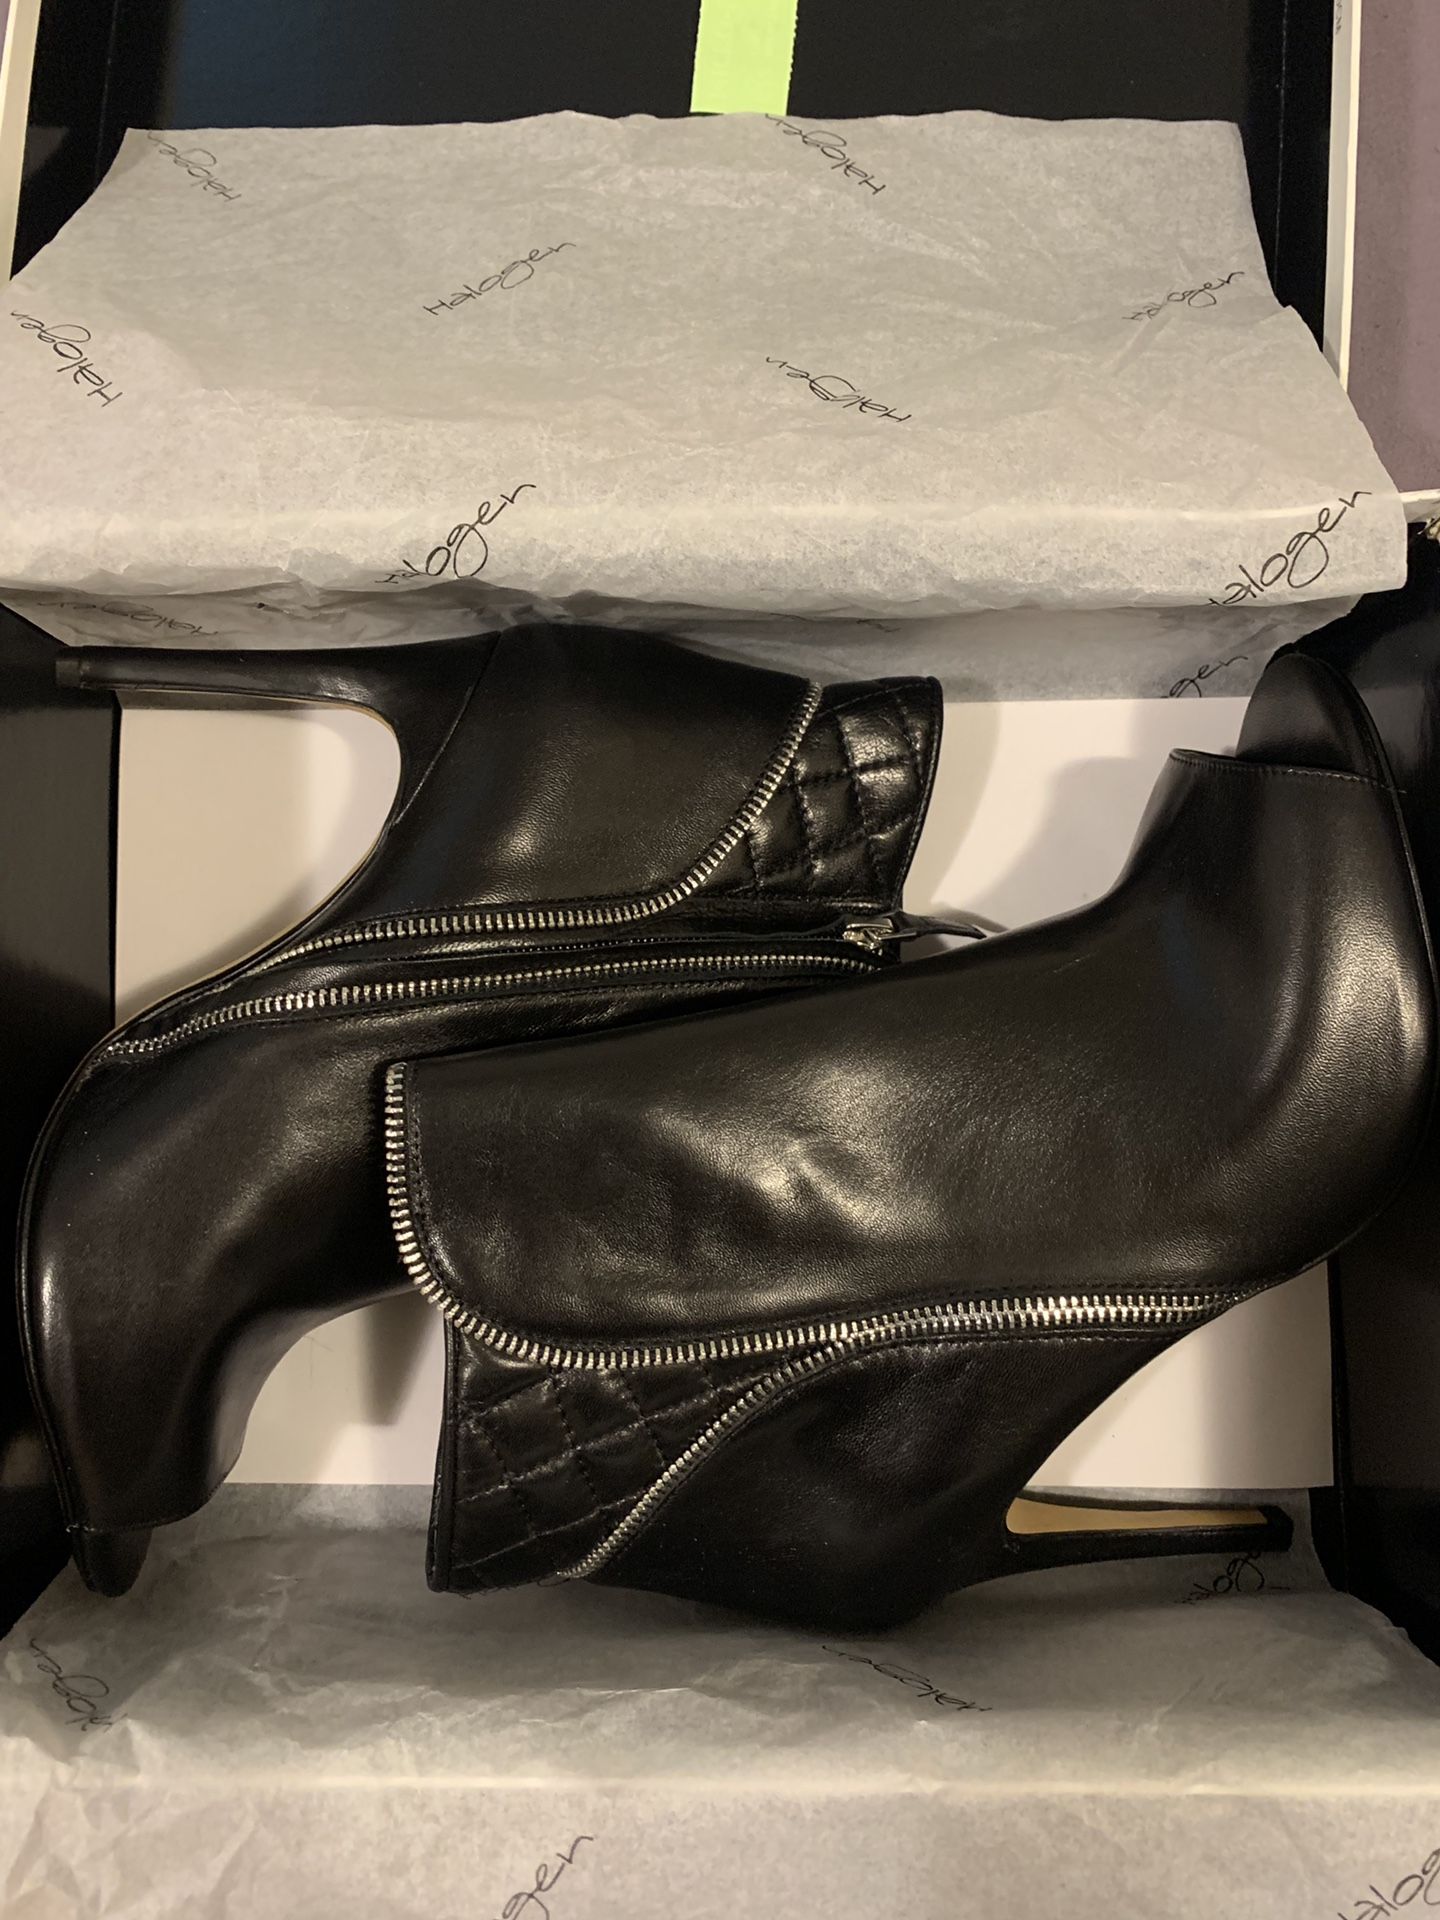 Women black leather heels size 9 - Never worn - new in box - $60 OBO